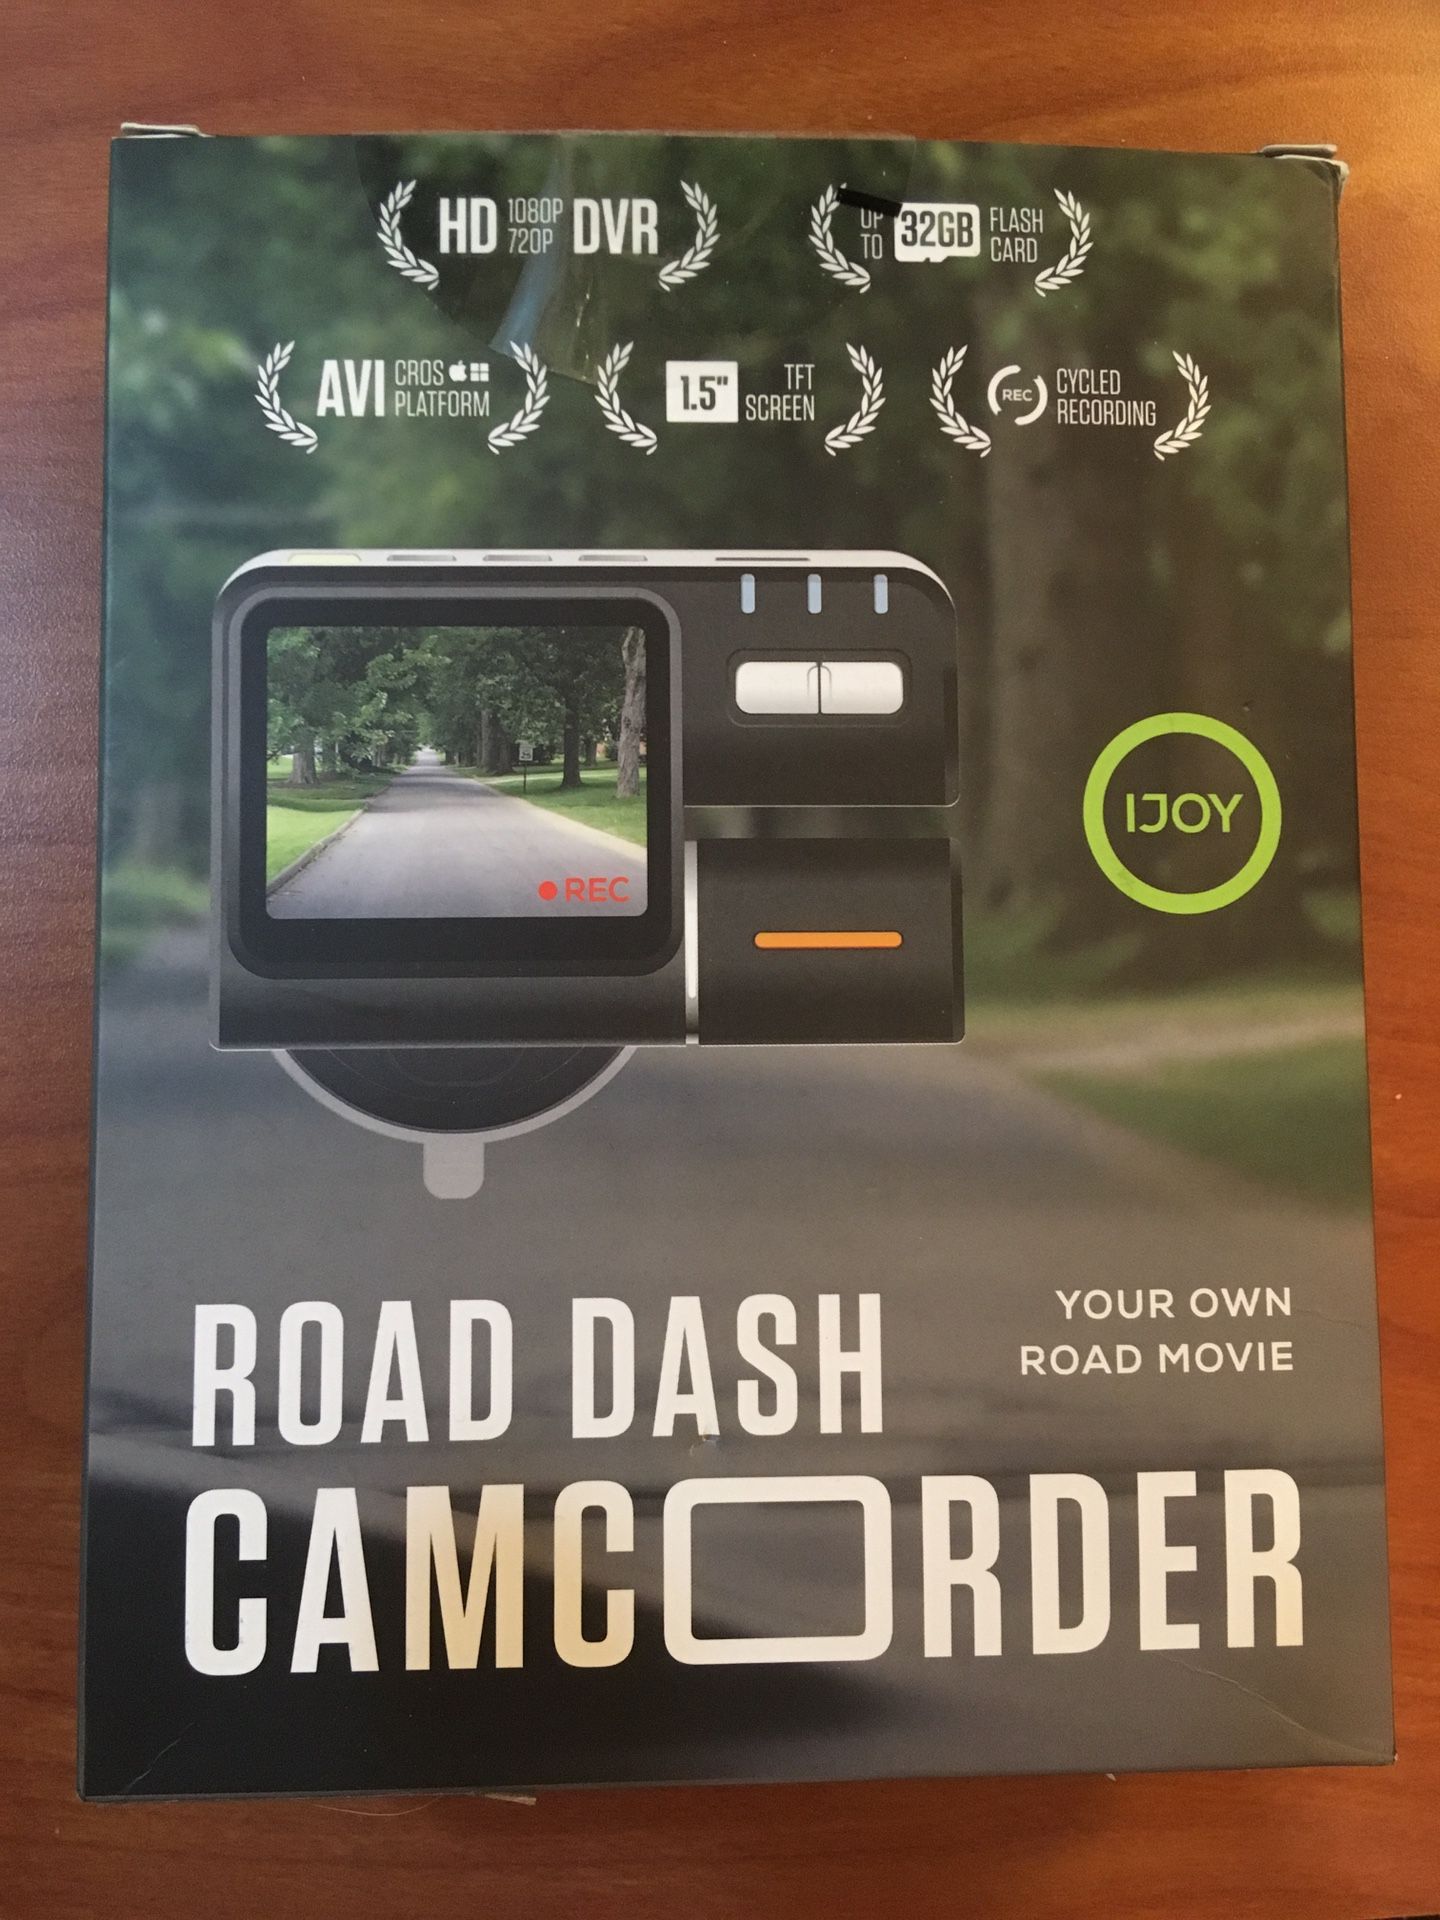 I joy Road Dash Camcorder